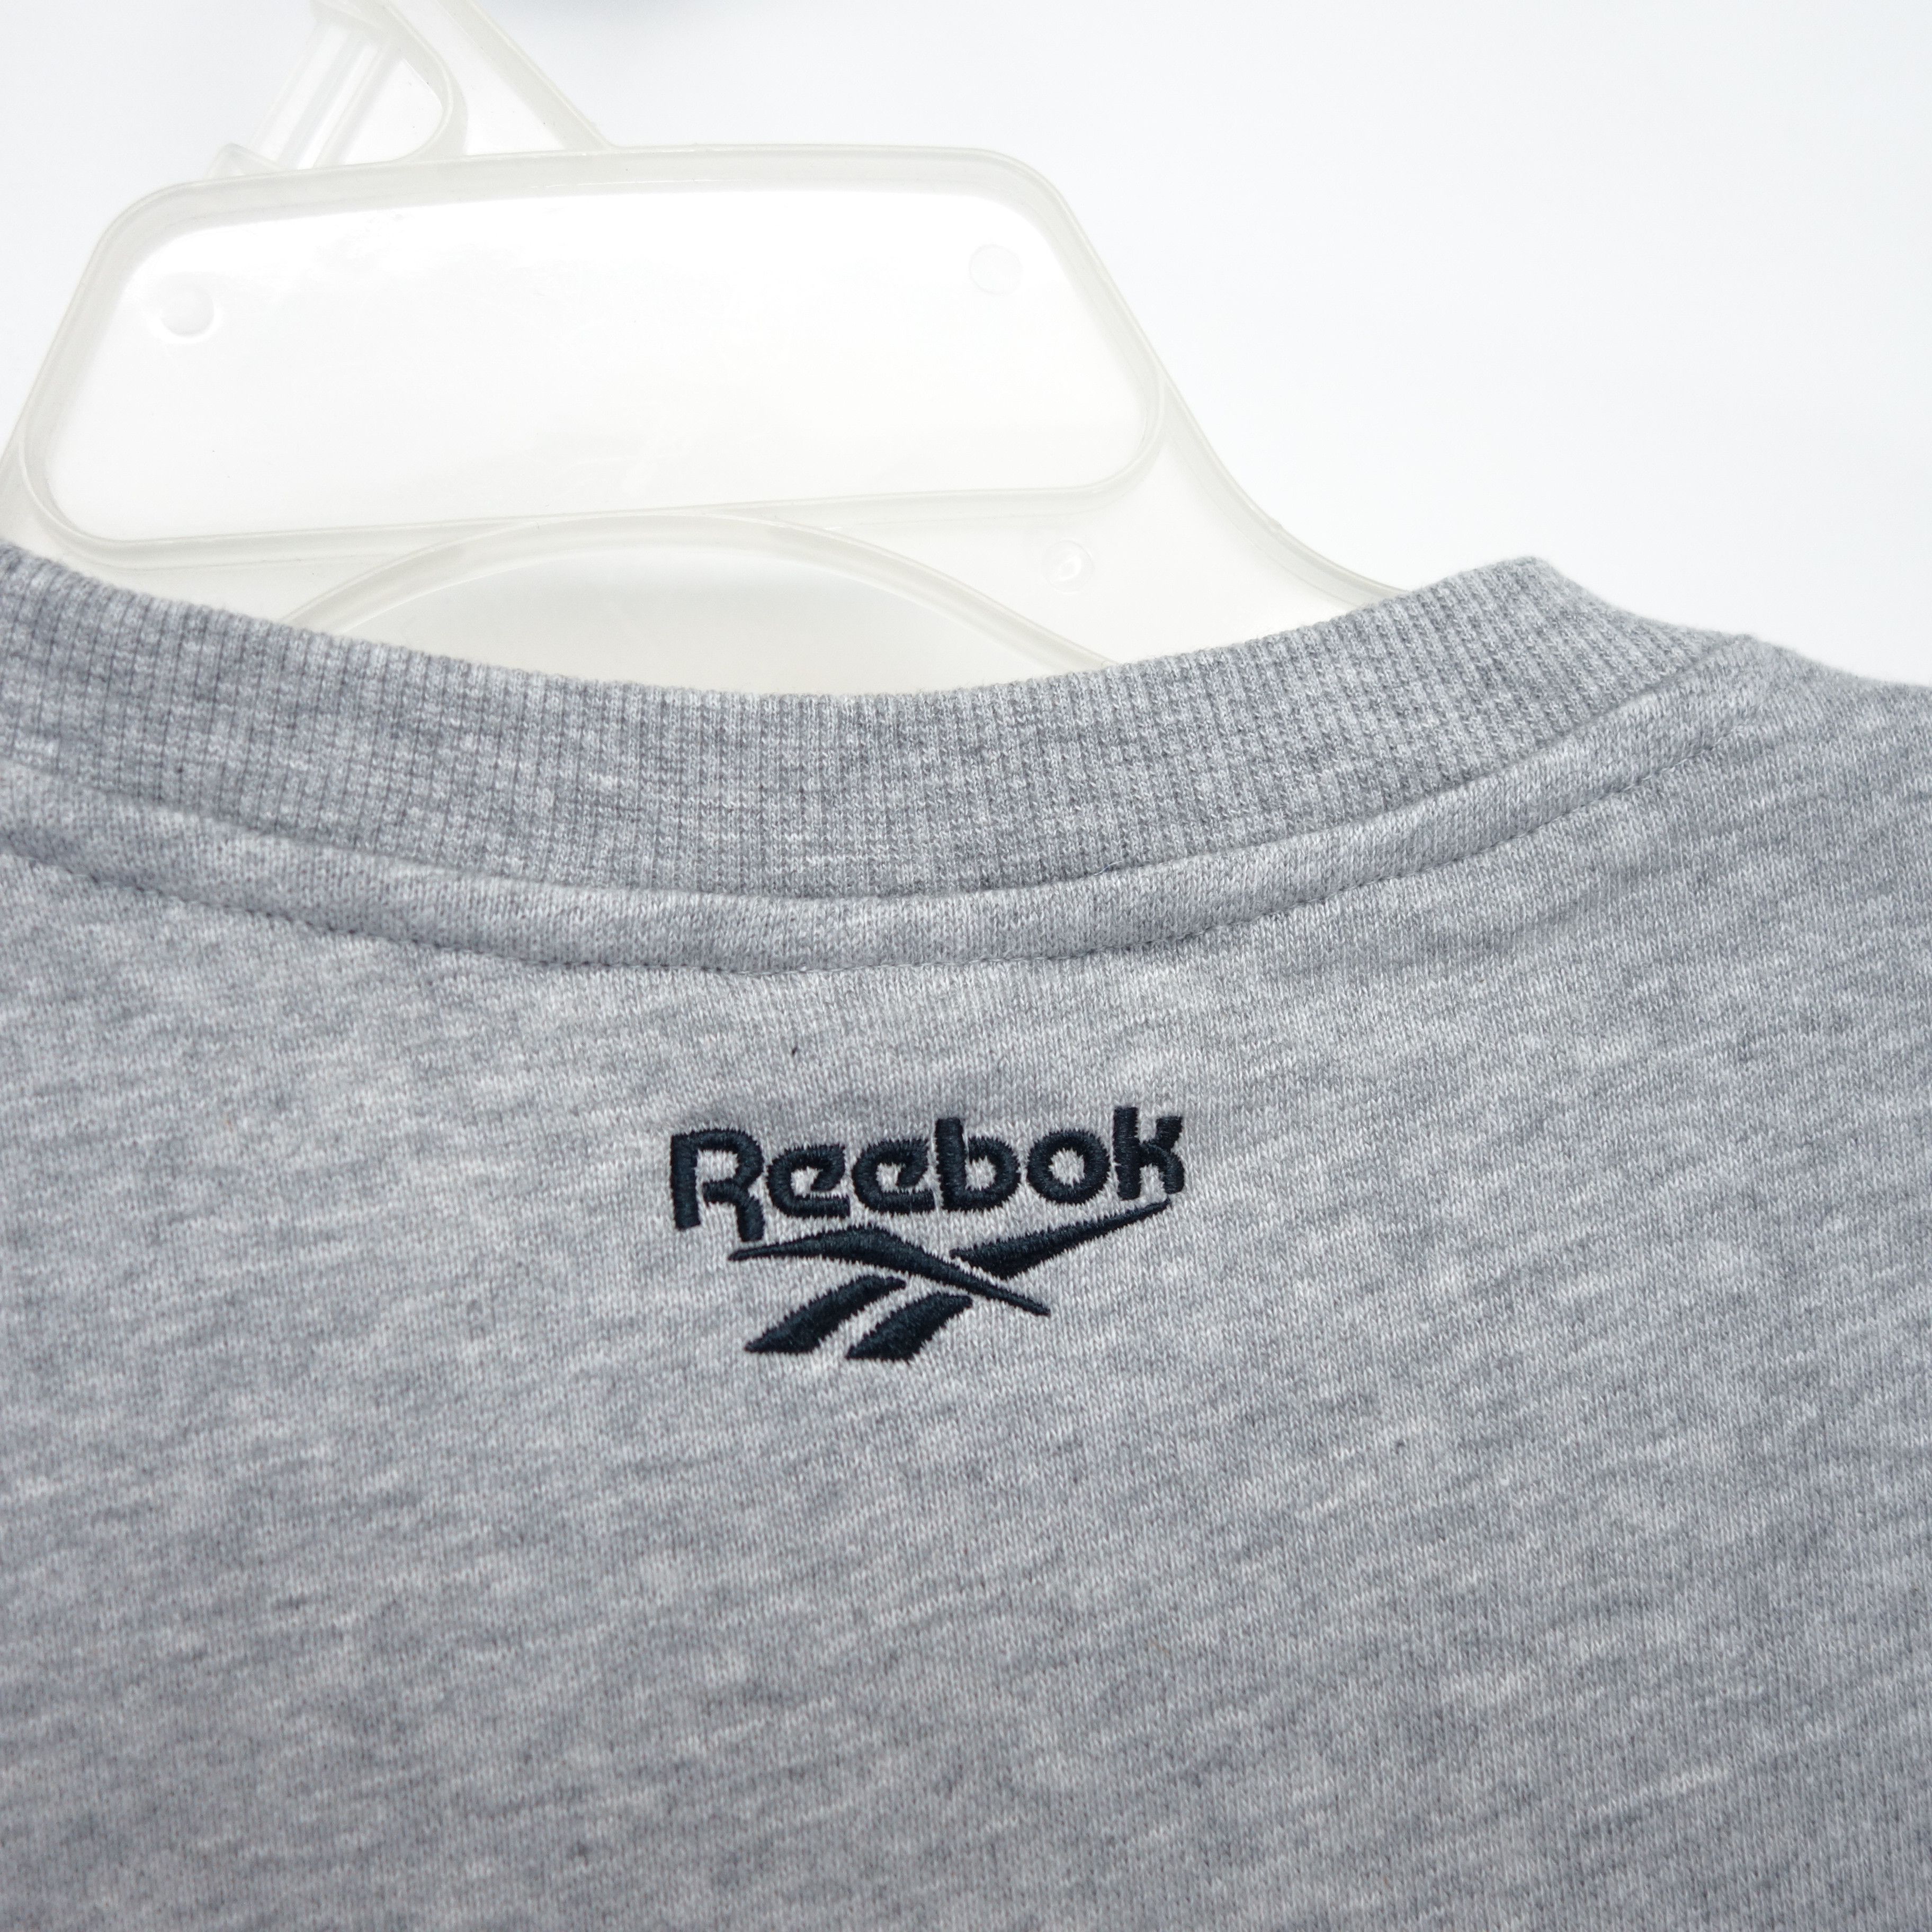 Reebok Gray Classic Logo Pullover Crew Neck Sweatshirt Medium Size US M / EU 48-50 / 2 - 5 Preview